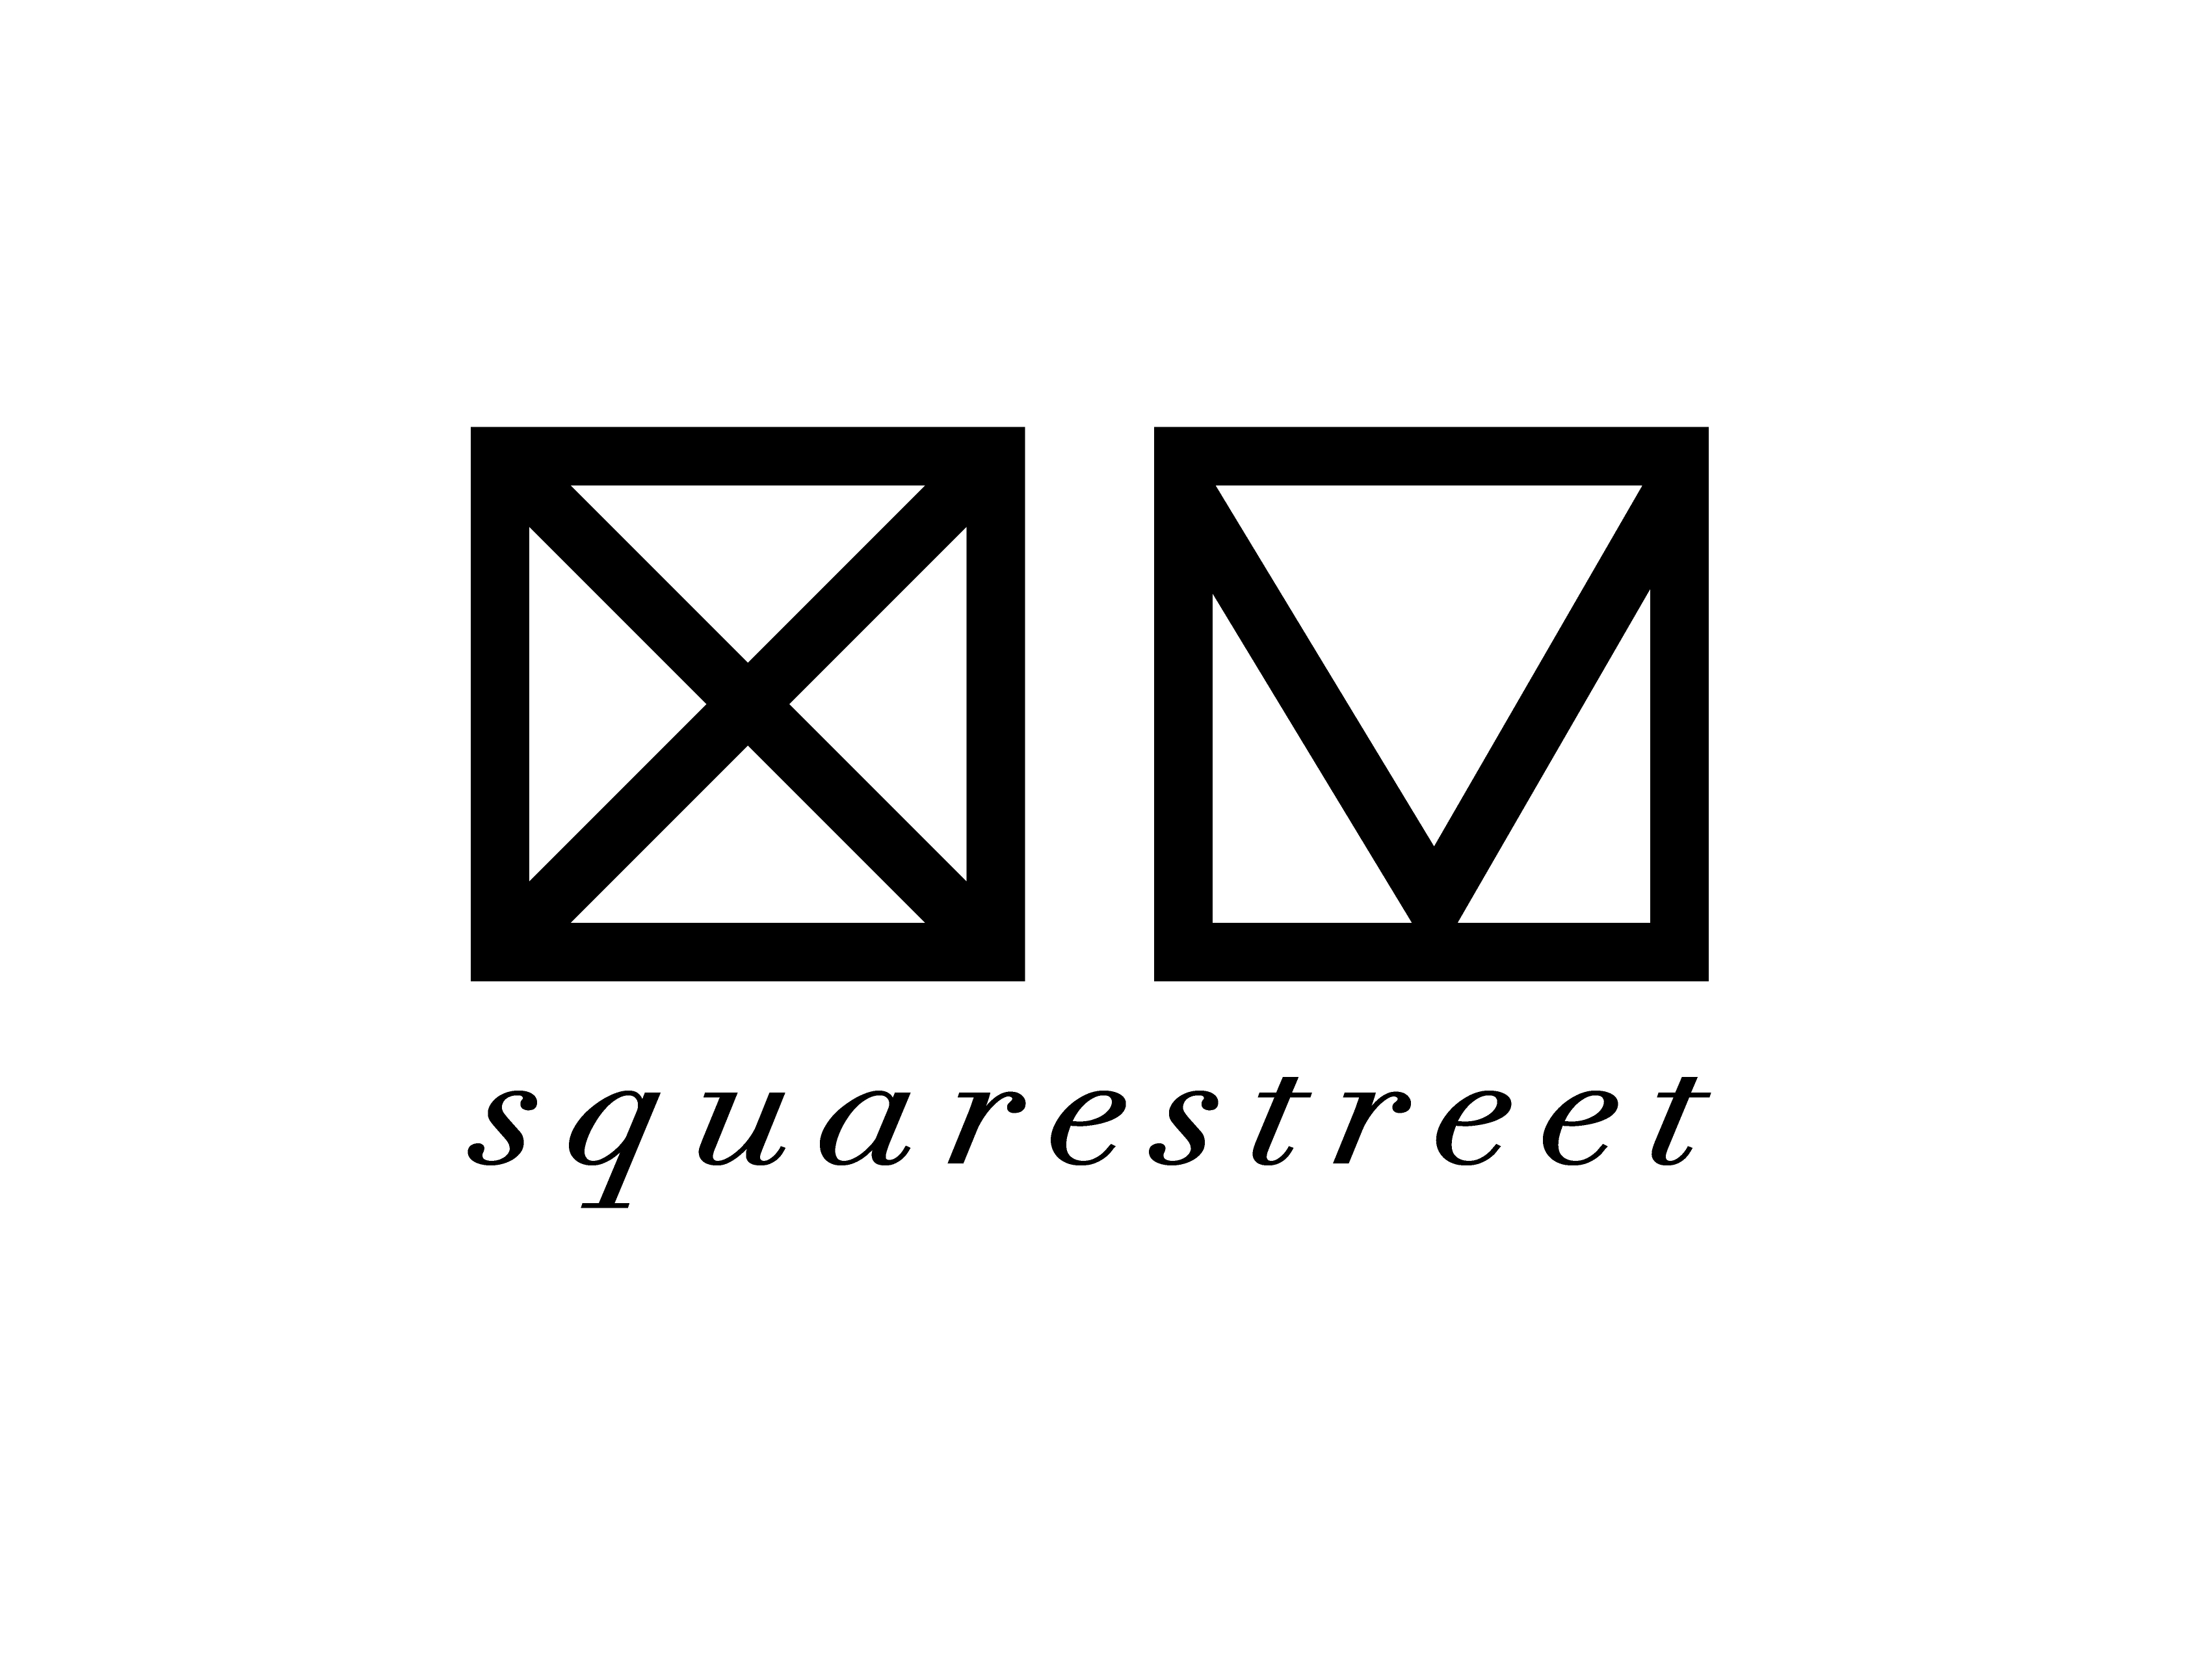 squarestreet